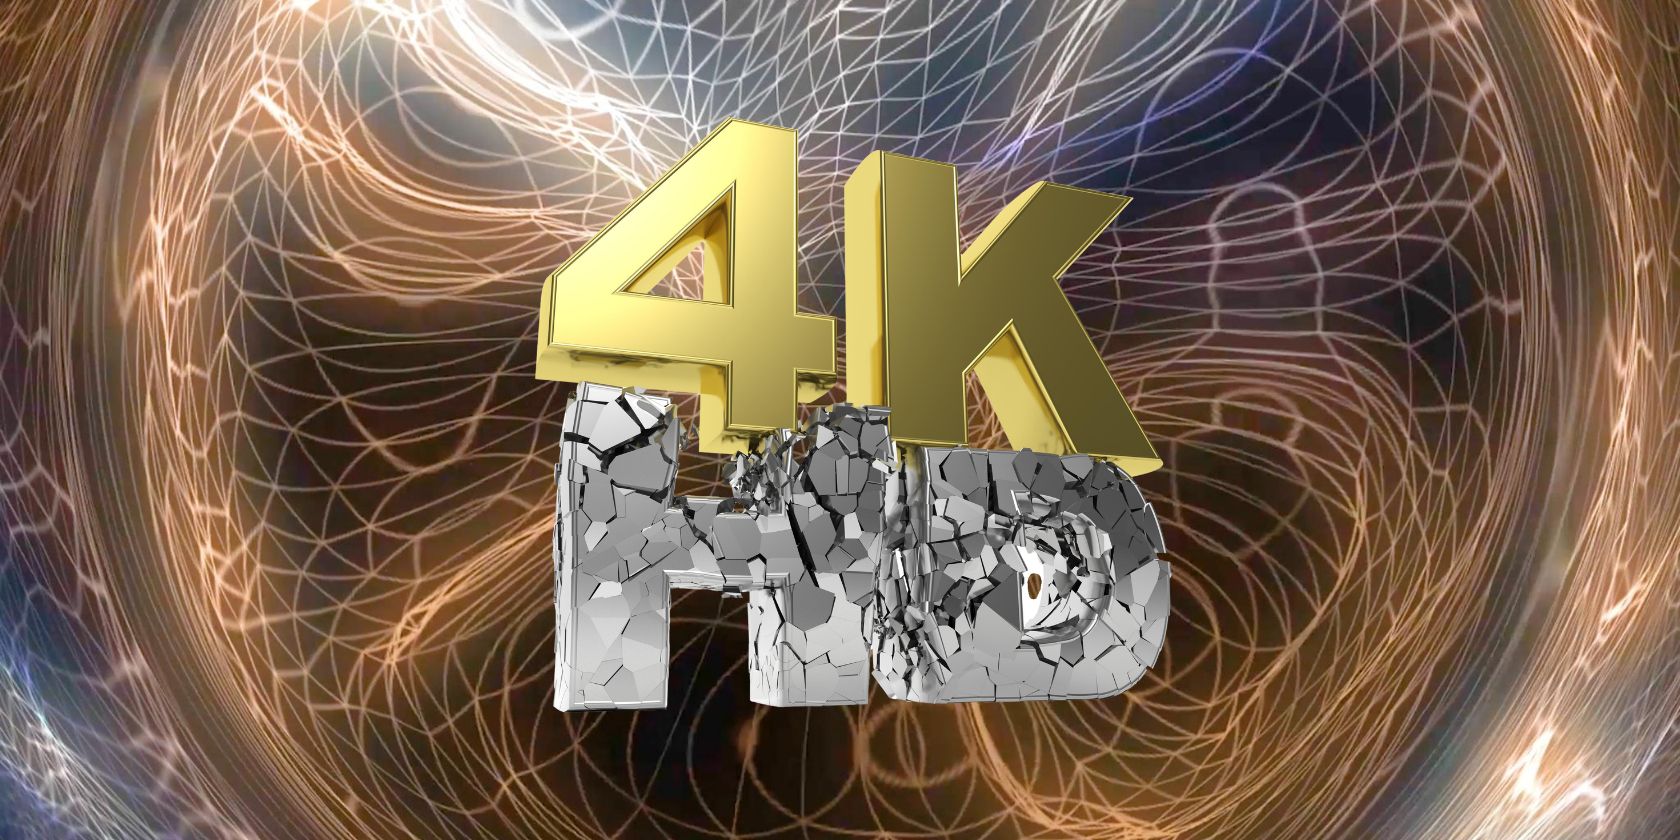 An illustration of 4K HD image